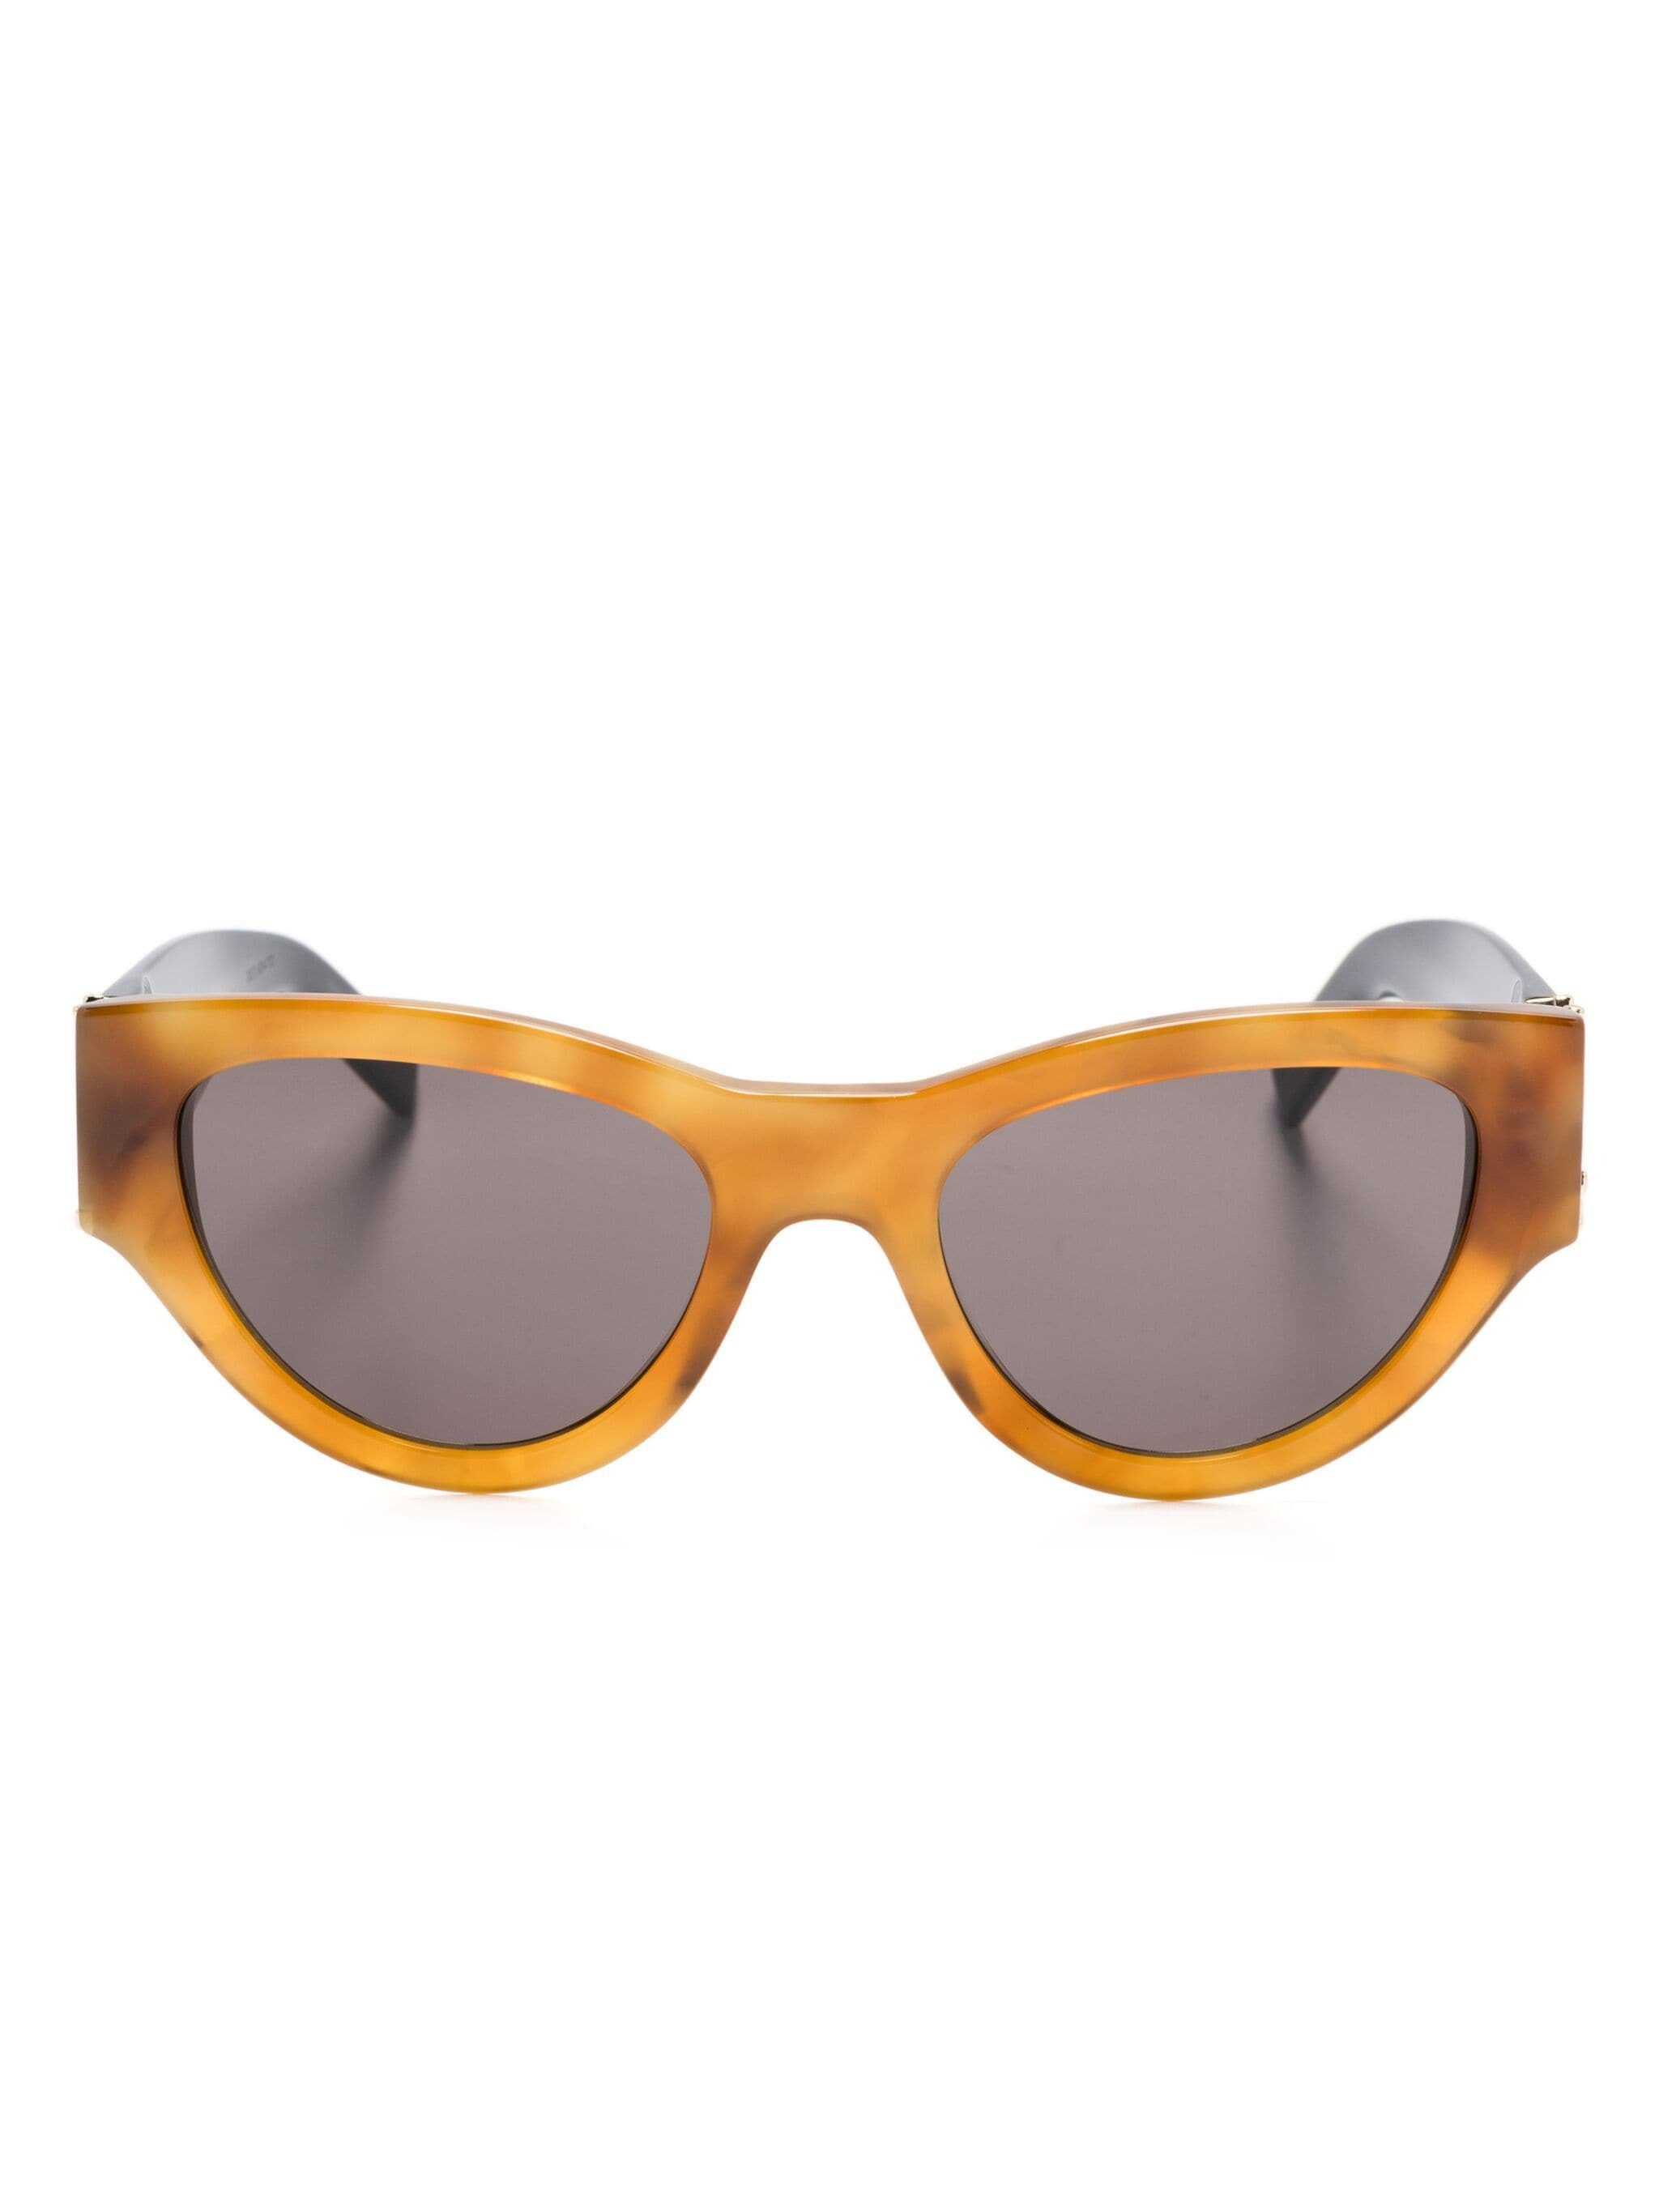 SL M94 sunglasses